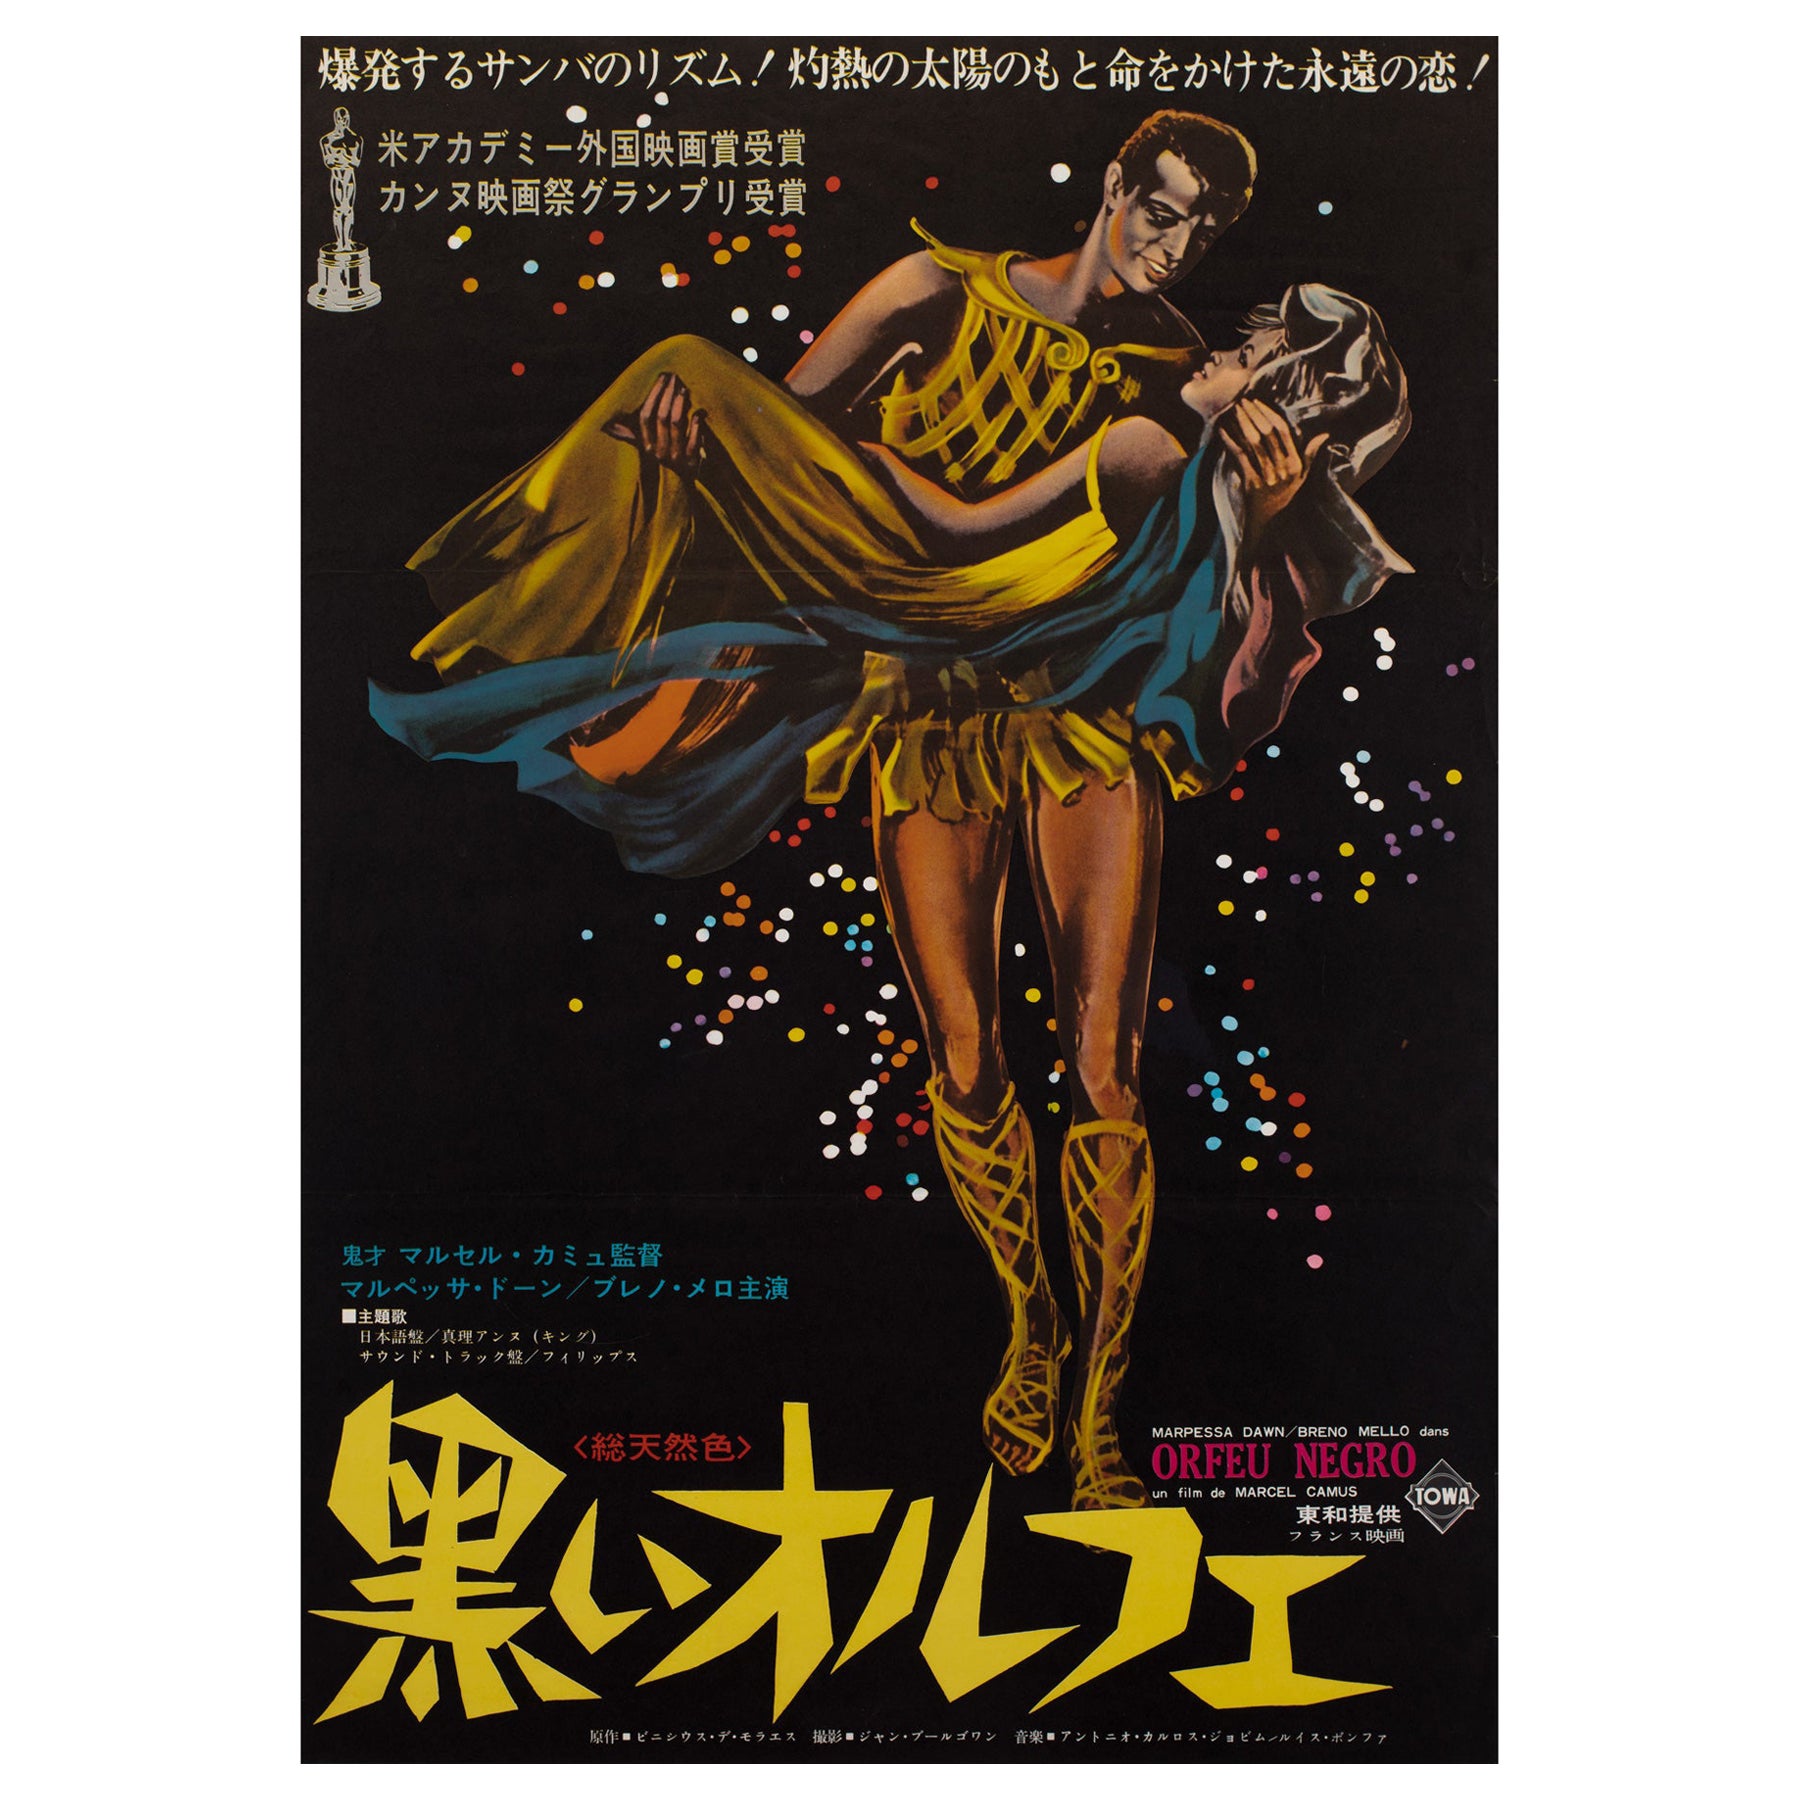 ""Black Orpheus", Japanischer Film, Filmplakat, 1960